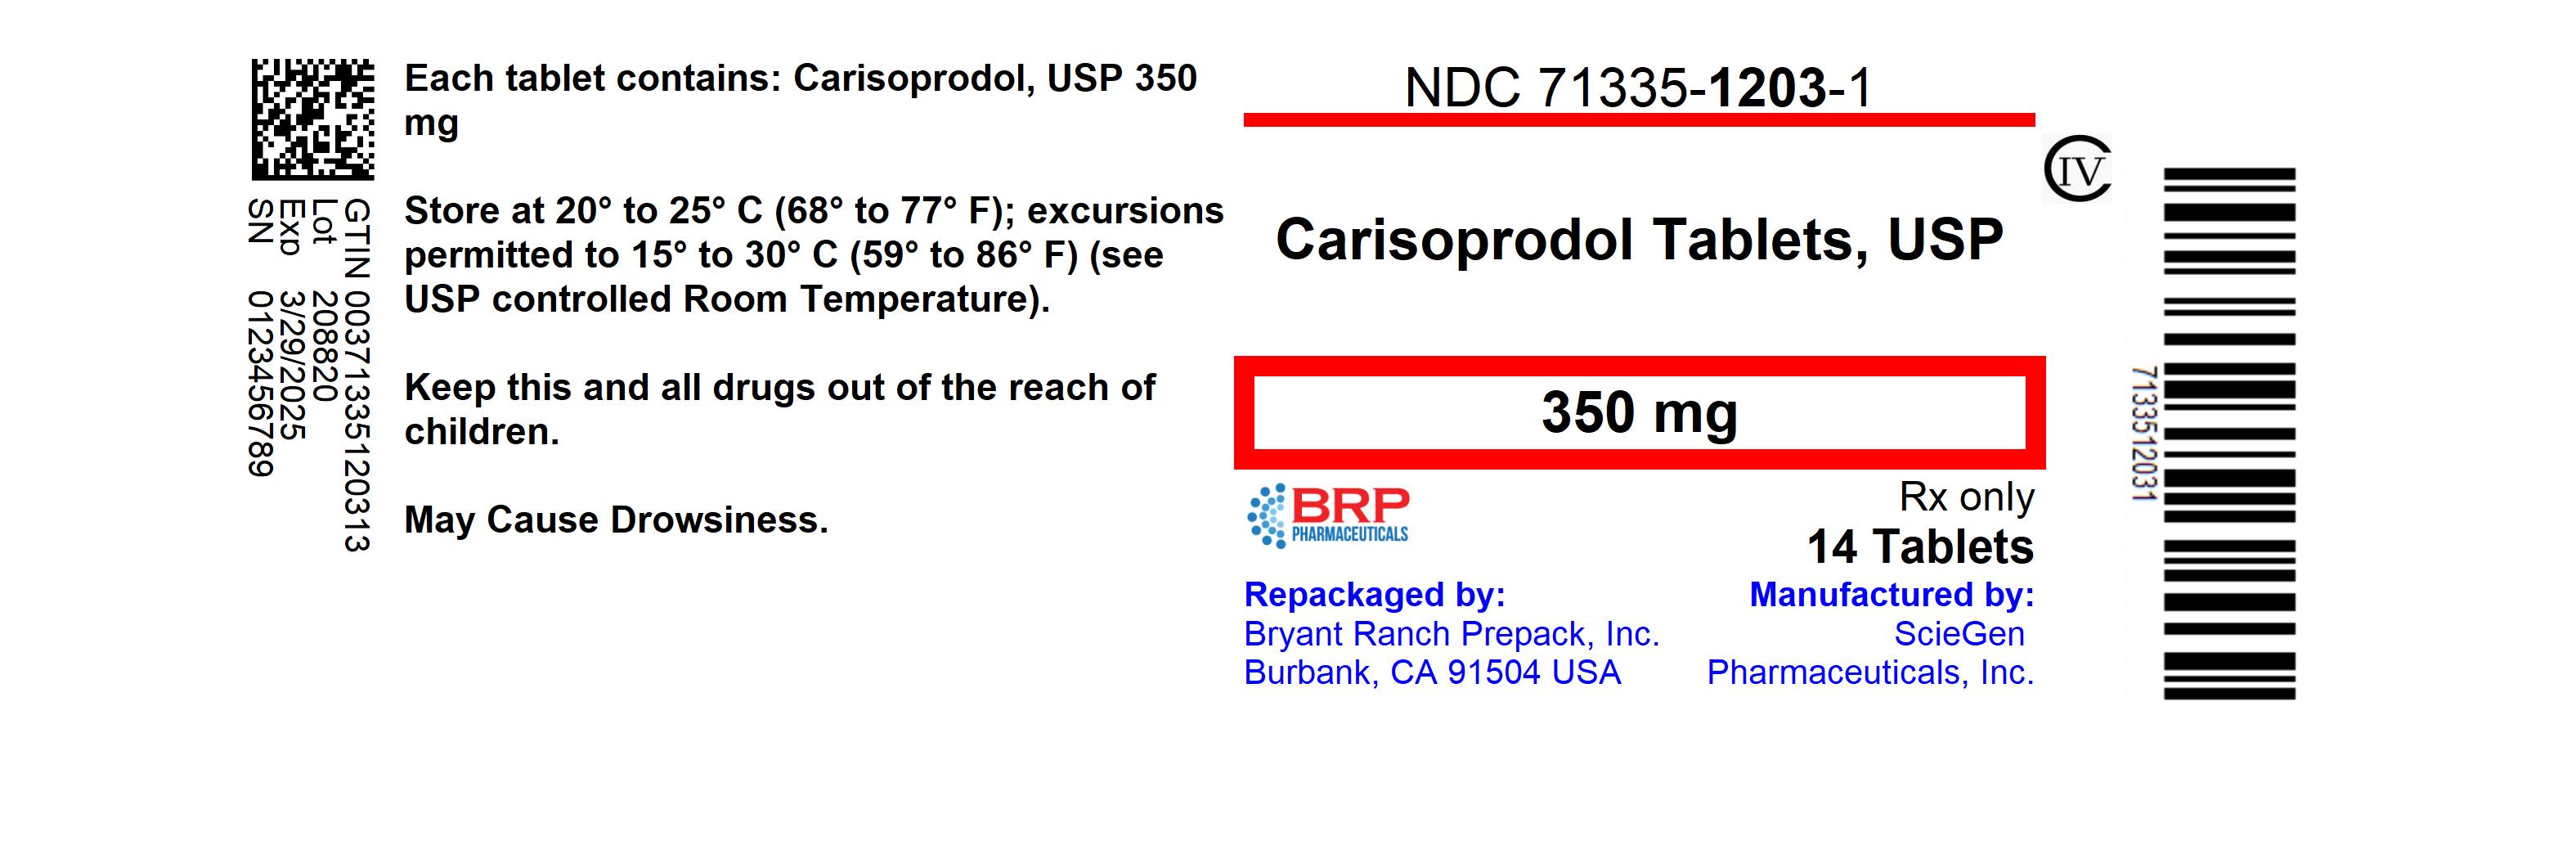 Carisoprodol 14 In 1 Bottle Breastfeeding